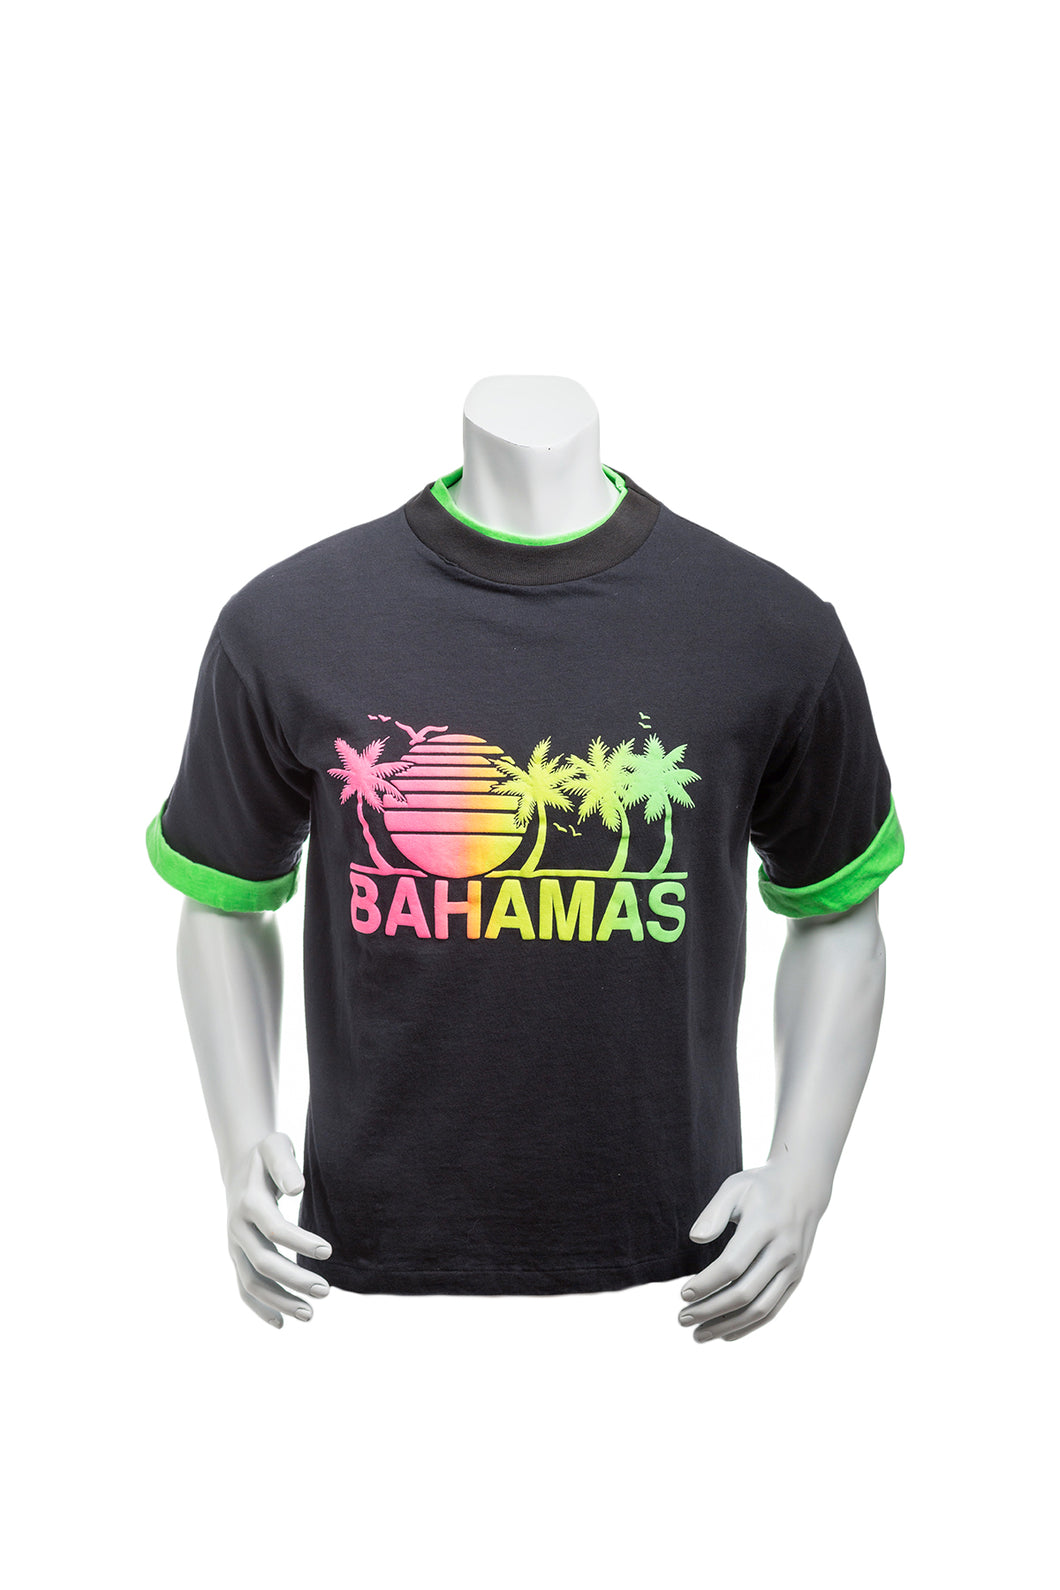 Vintage 90's Bahamas Puffy Paint Single Stitch T-Shirt Men's Large